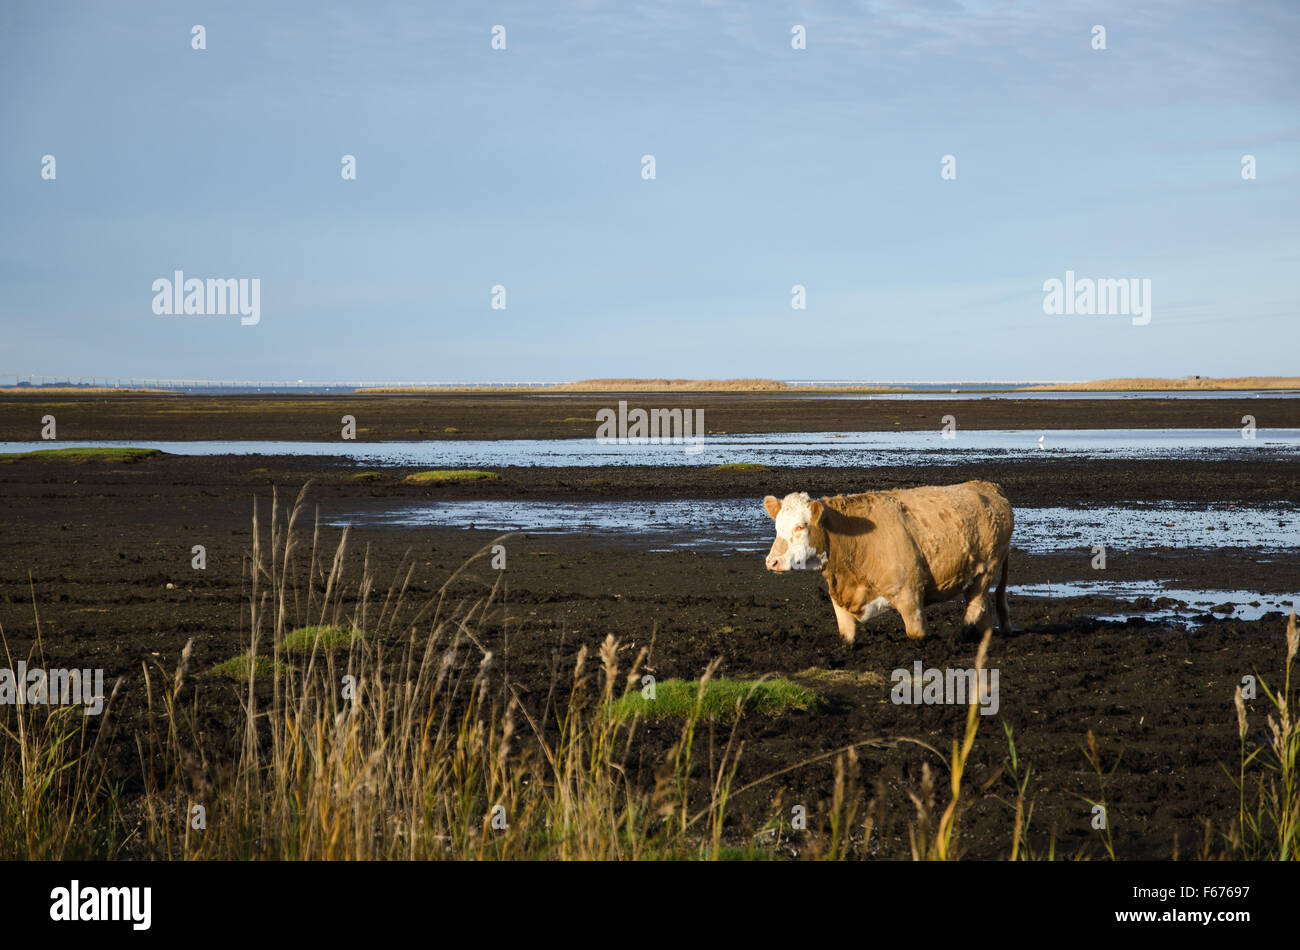 Sunlit cow walks in muddy water in a marsland Stock Photo